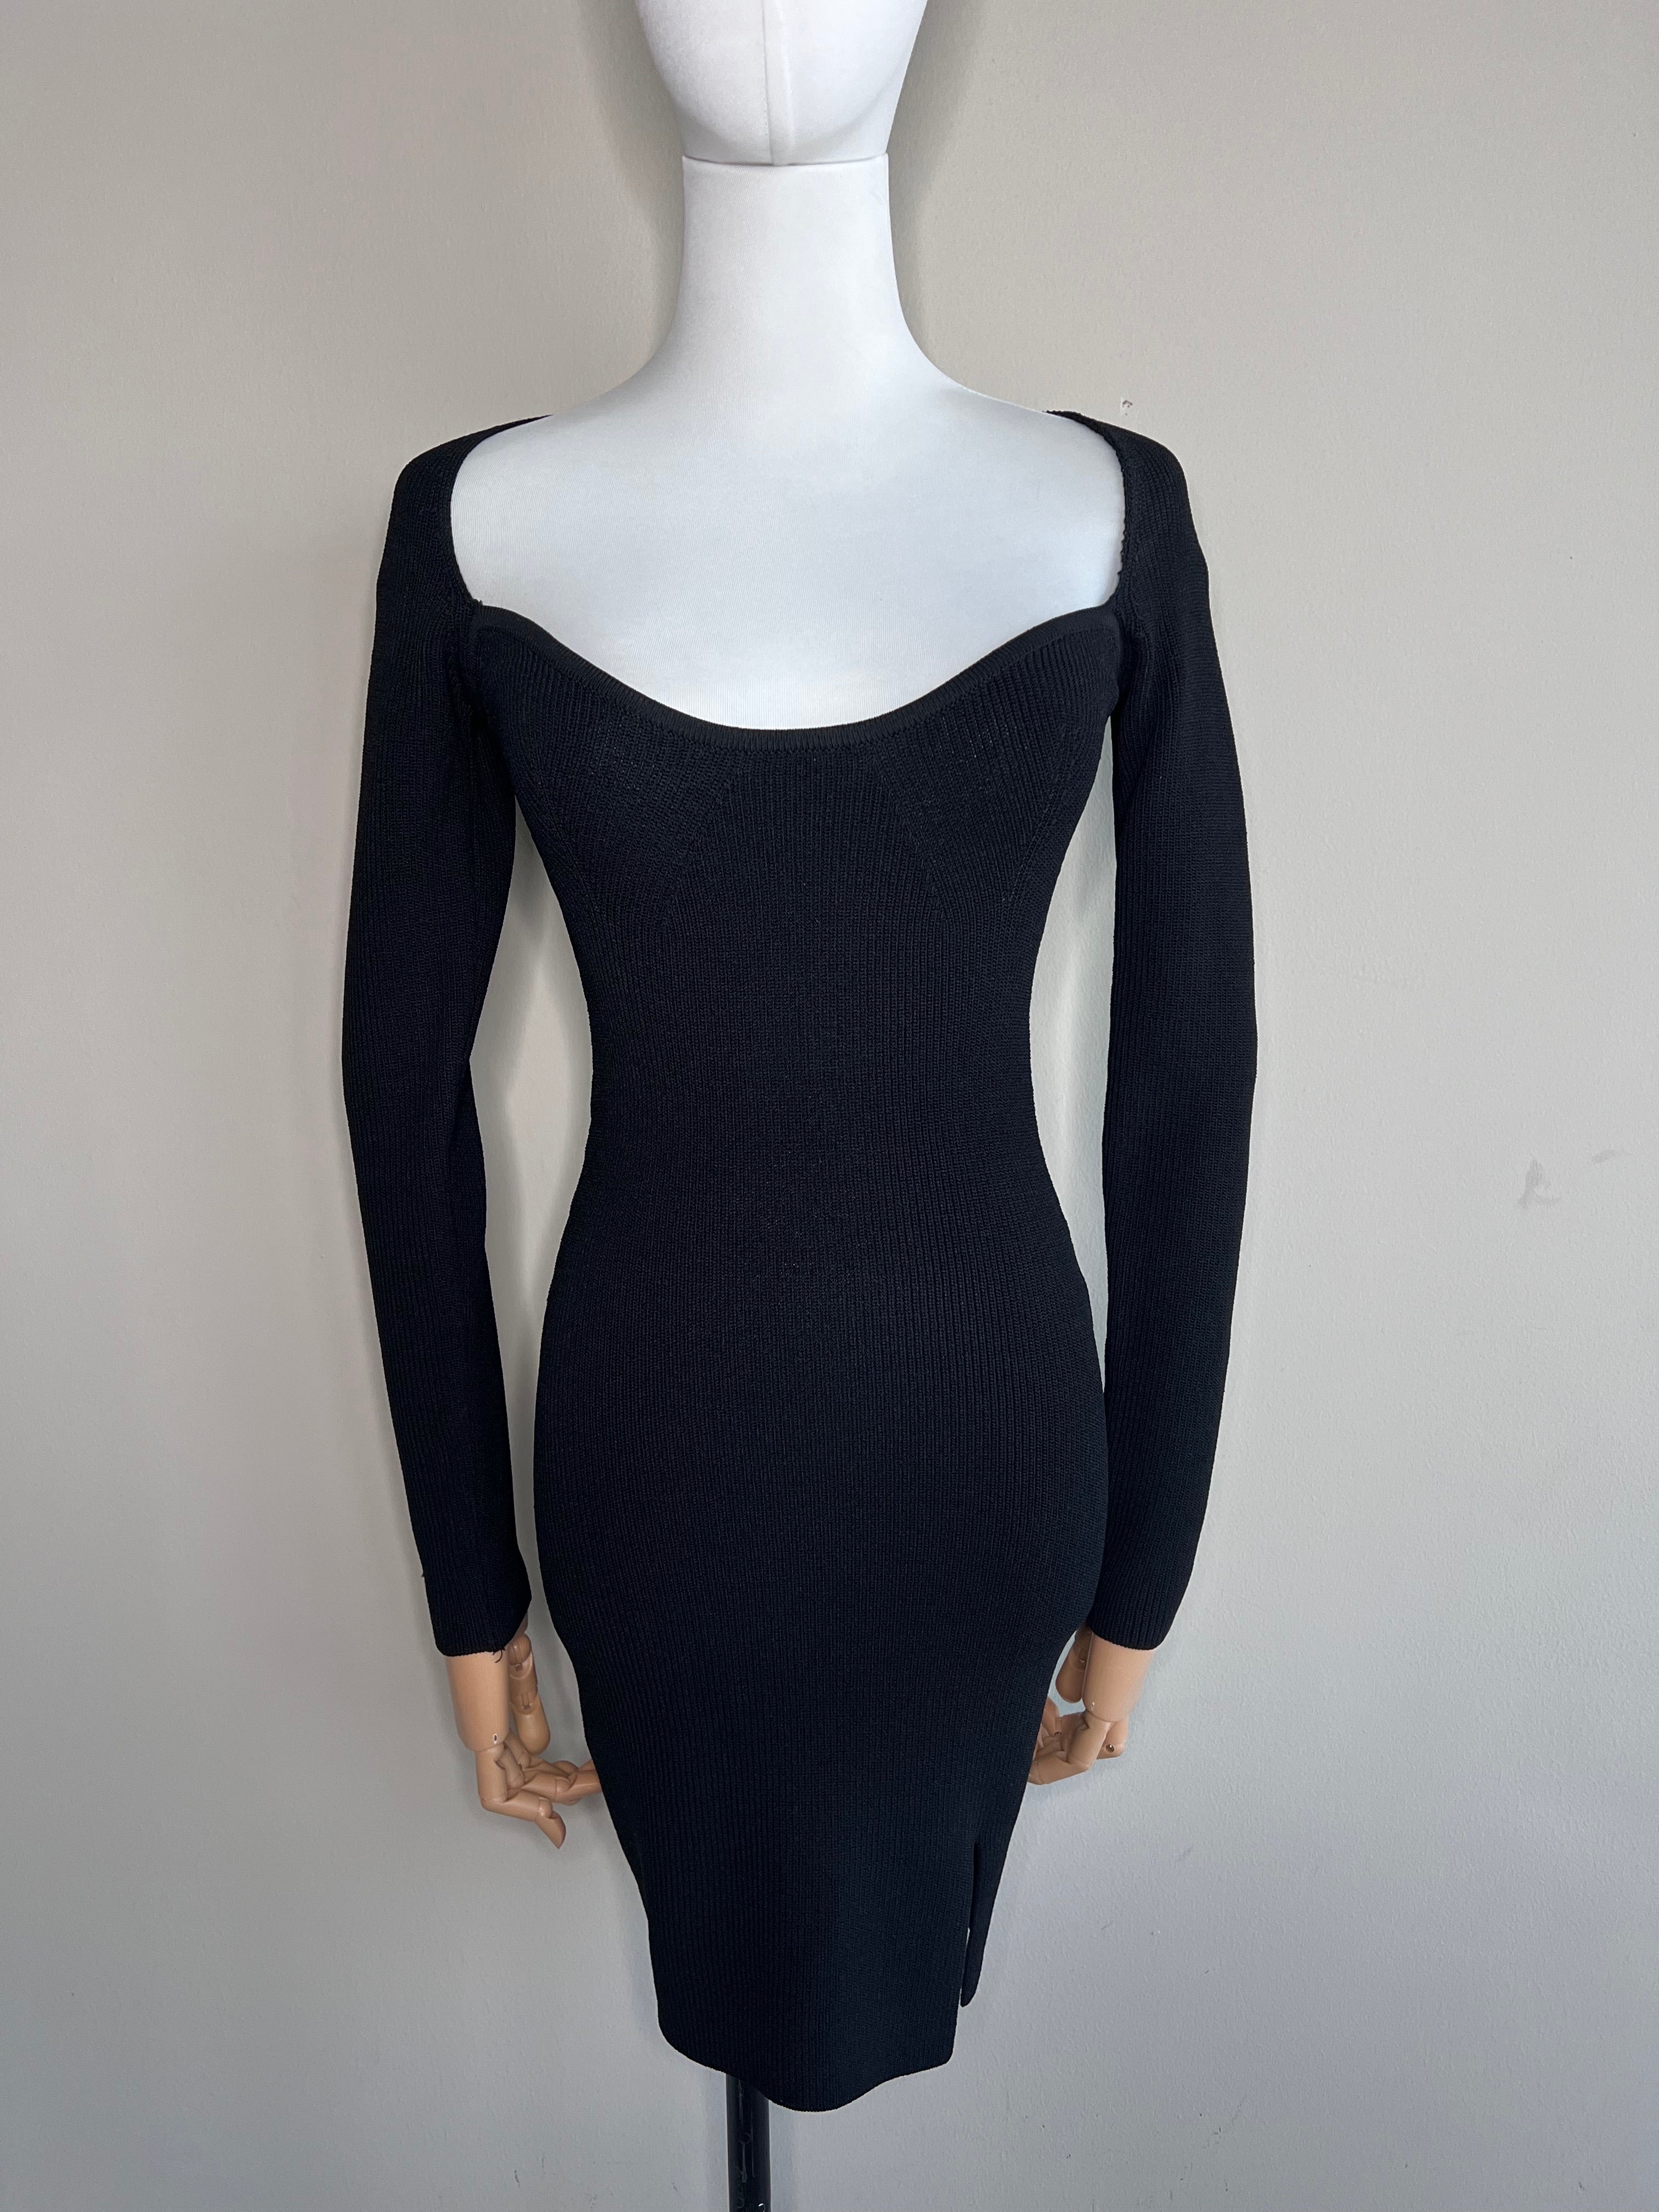 Black Modal Square Neck long sleeve mini dress - All the ways